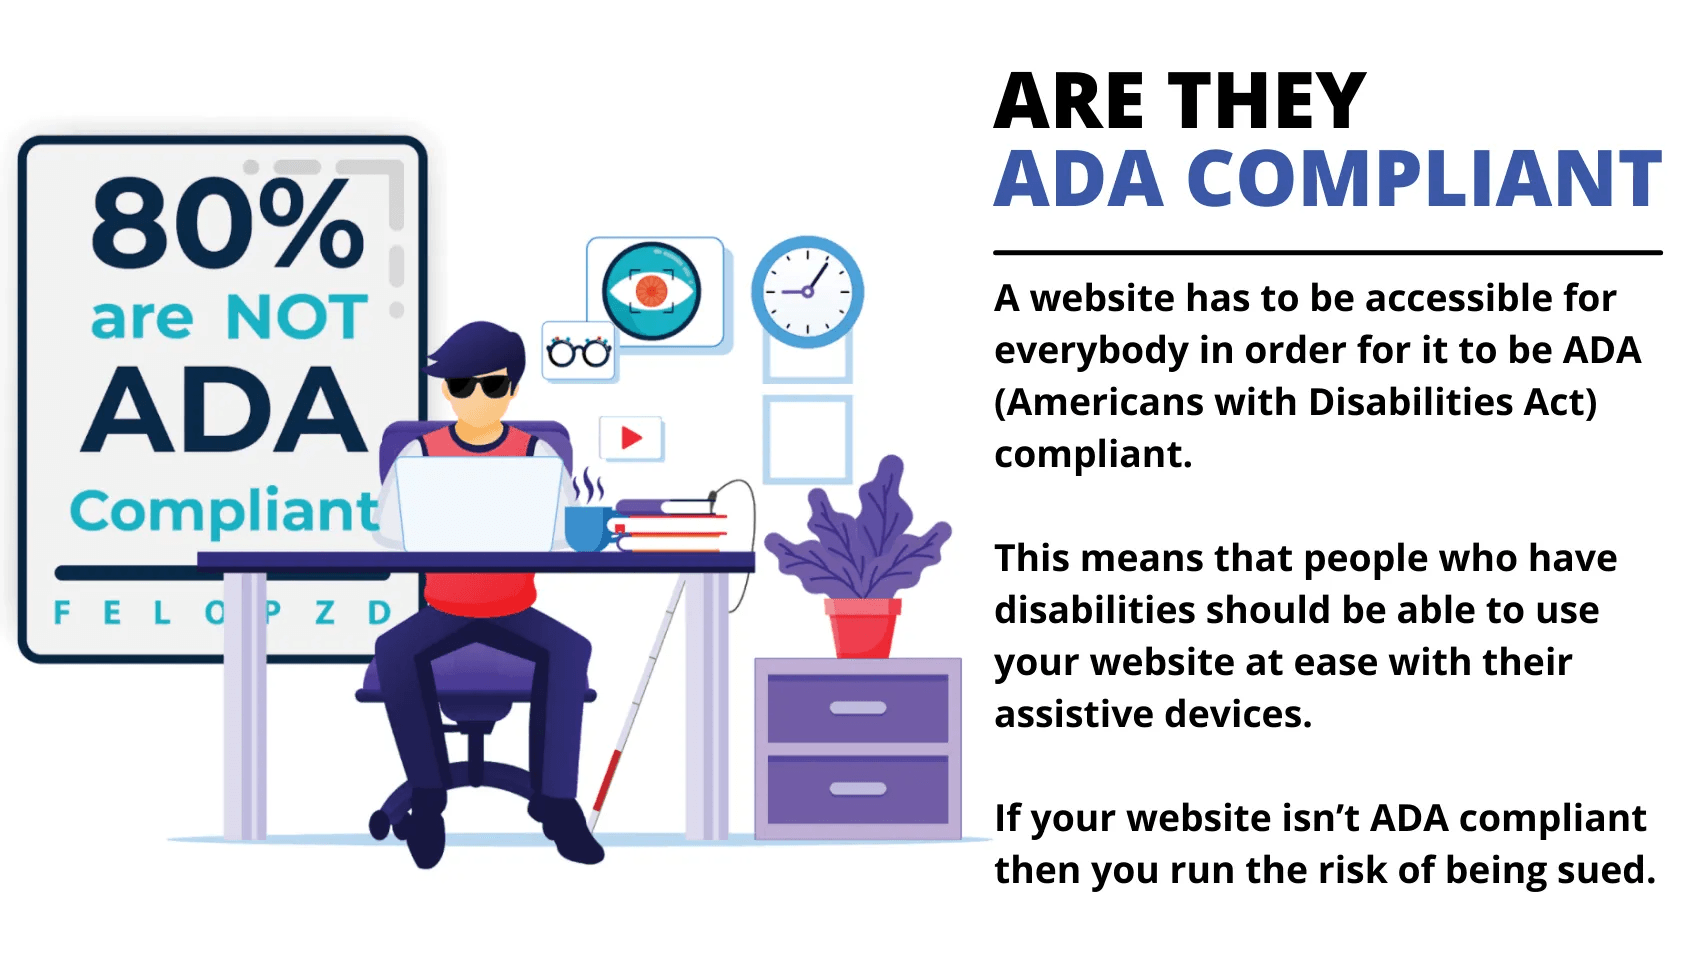 80% of websites are not ADA compliant